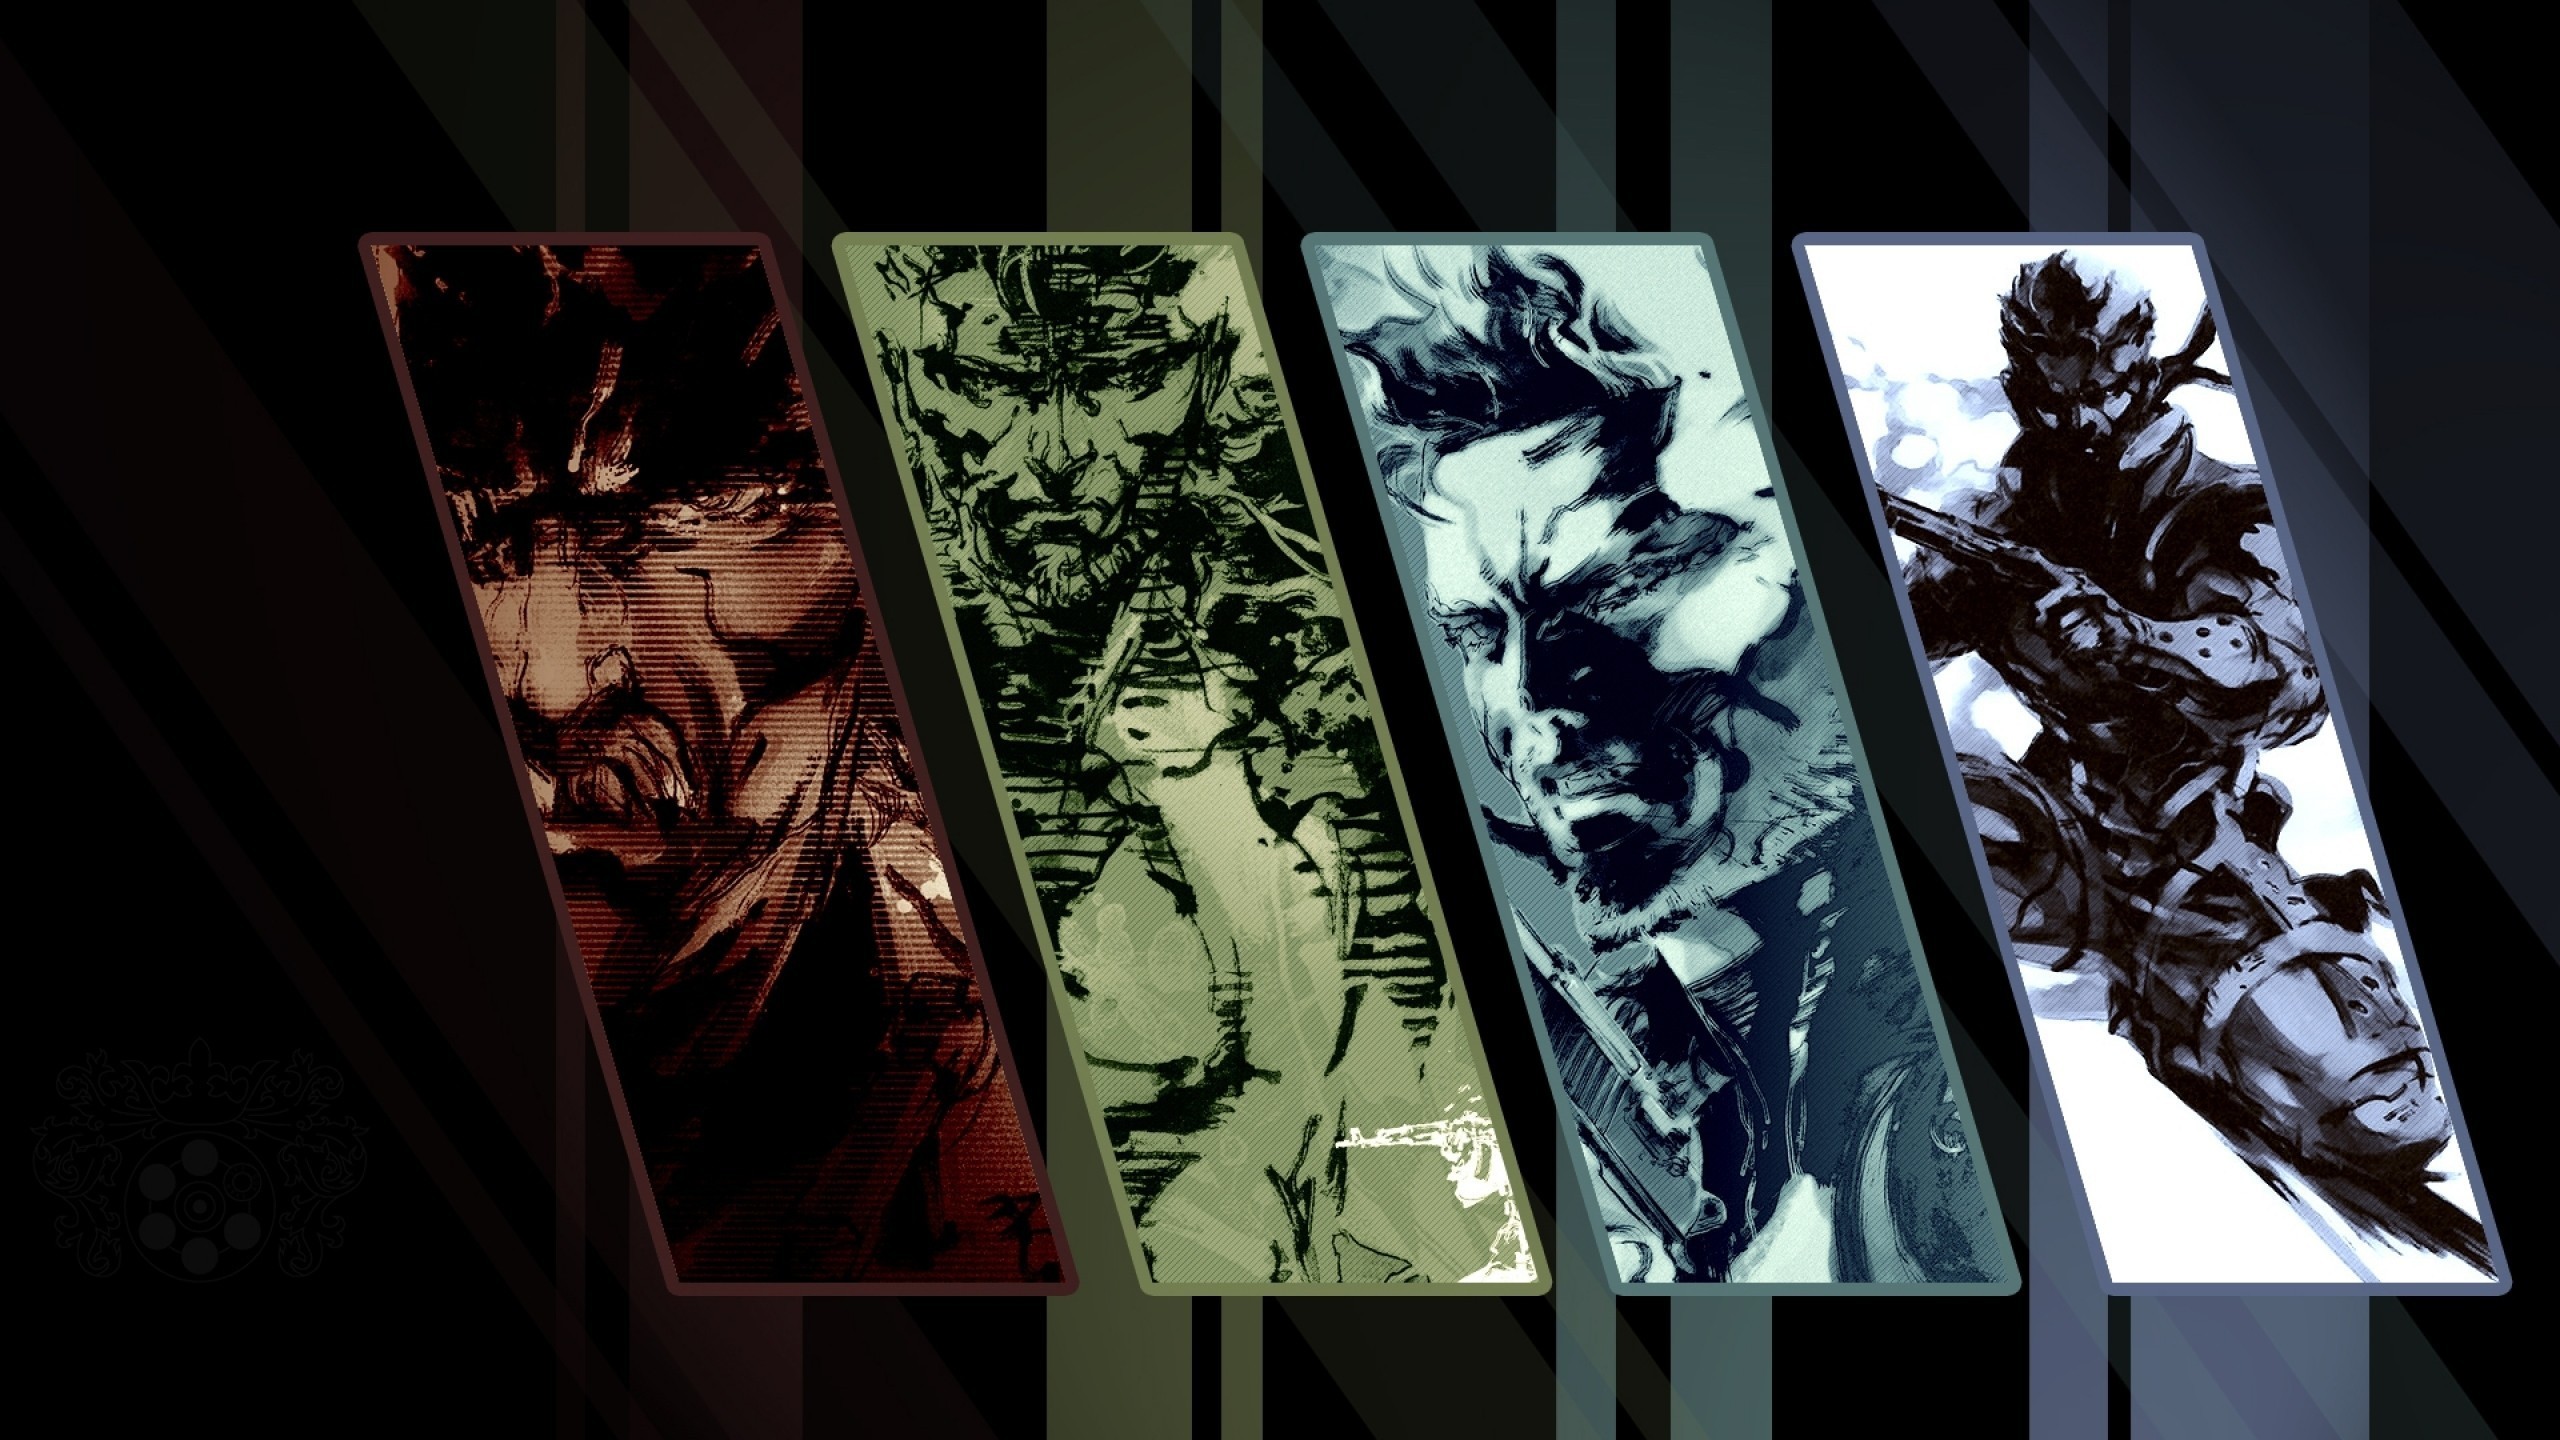 2560x1440 General  Metal Gear Solid 3: Snake Eater Metal Gear Solid collage  video games Metal